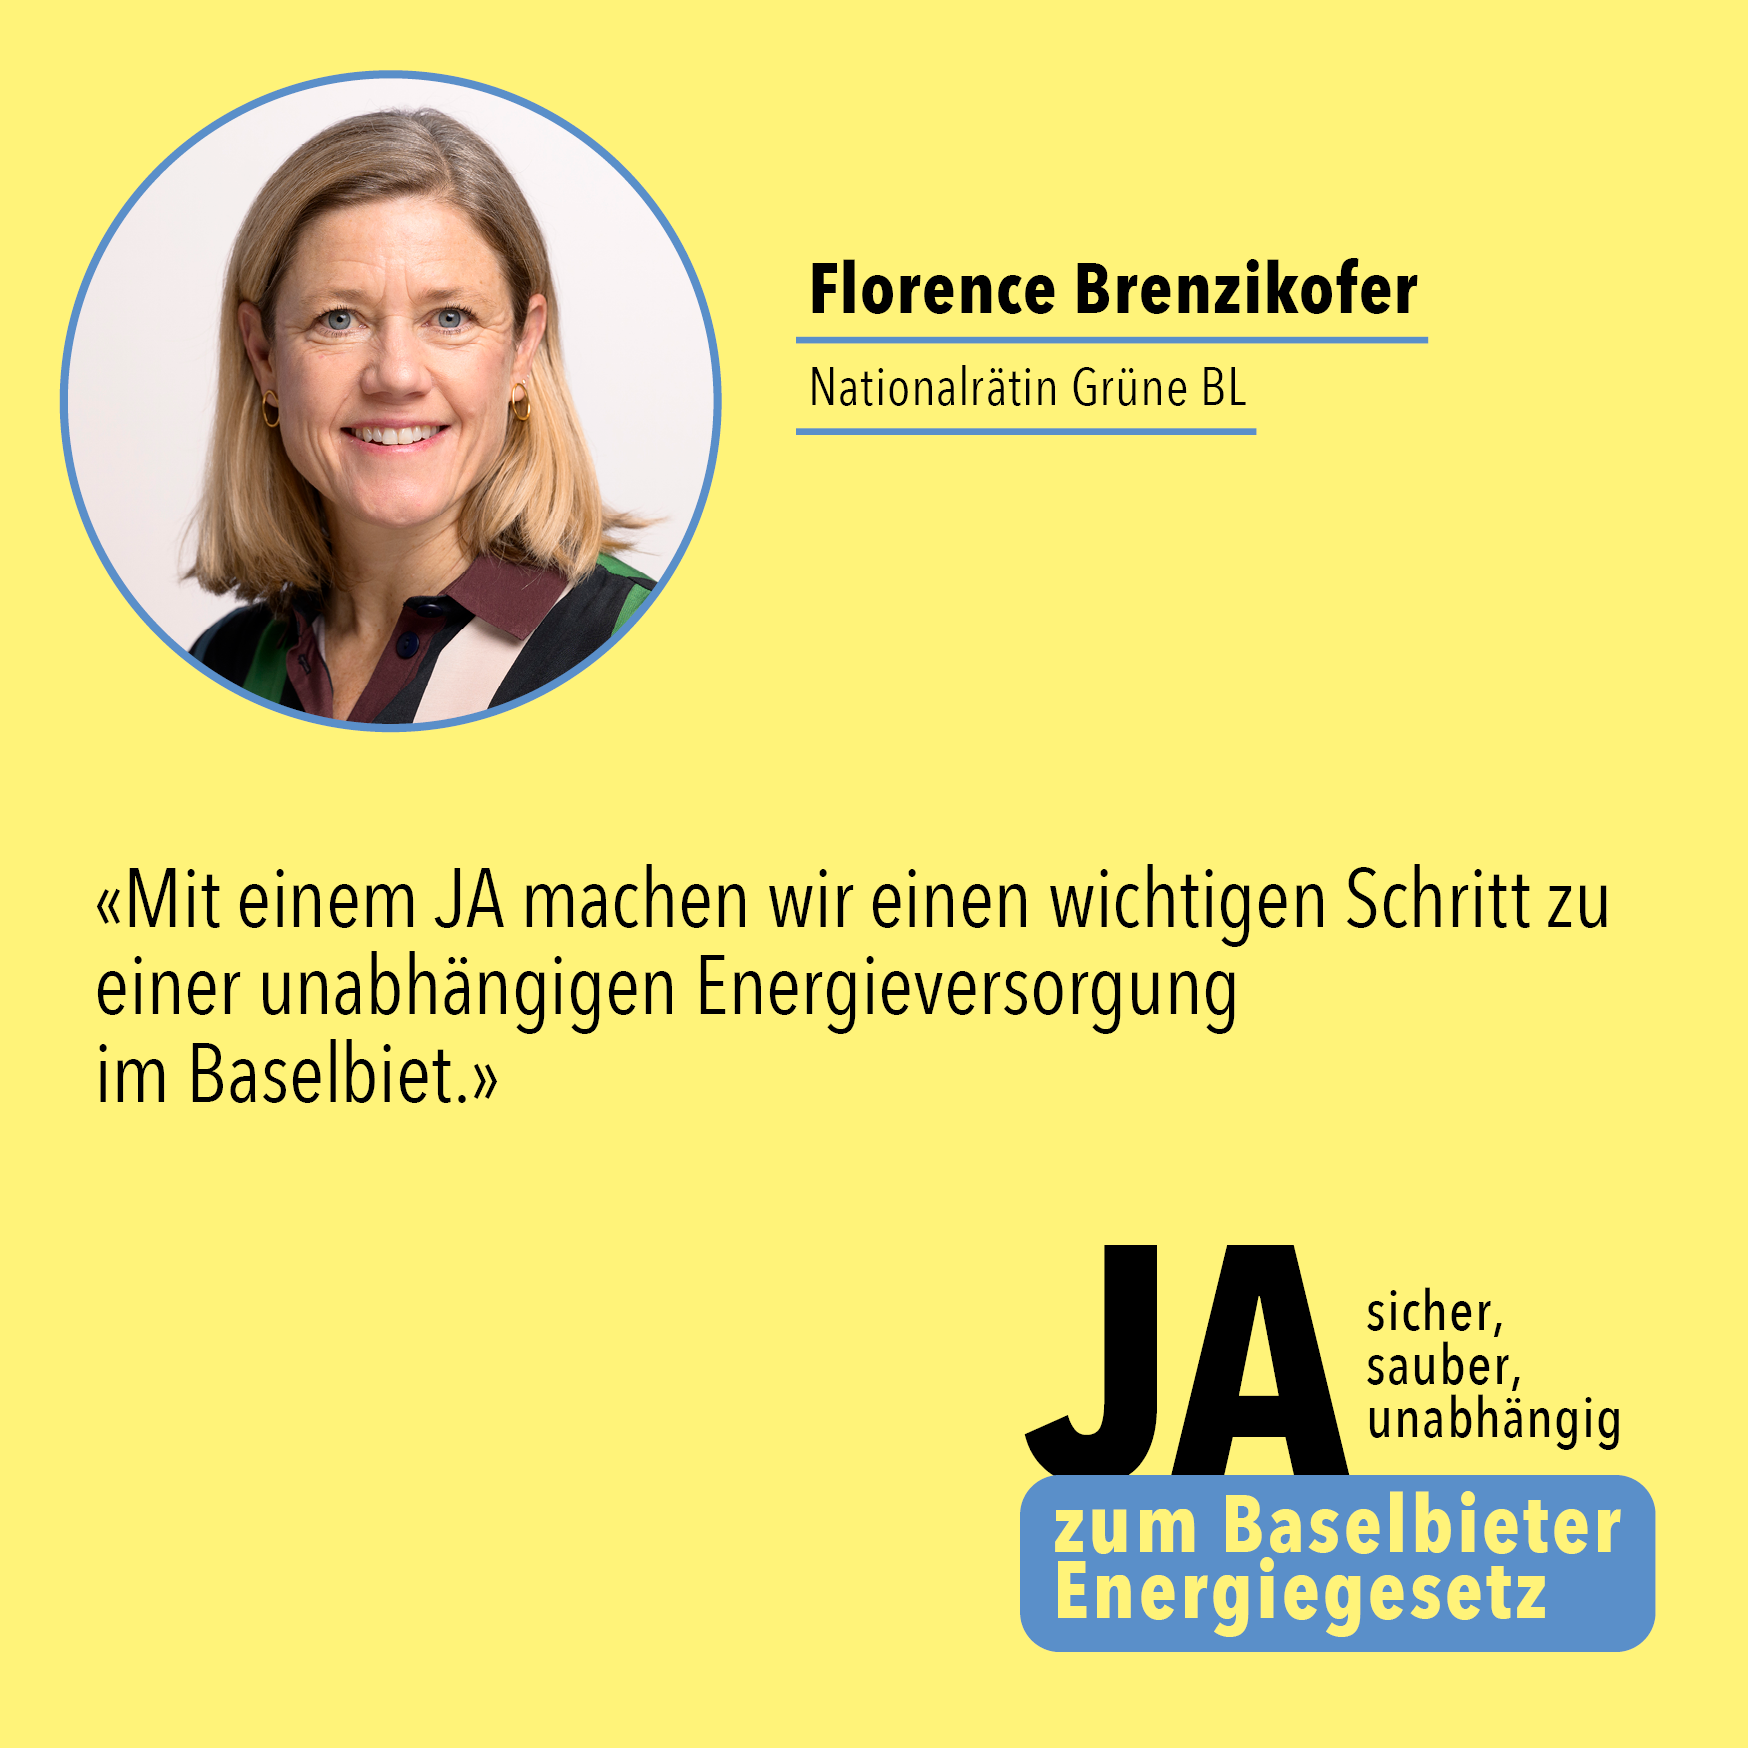 Florence Brenzikofer